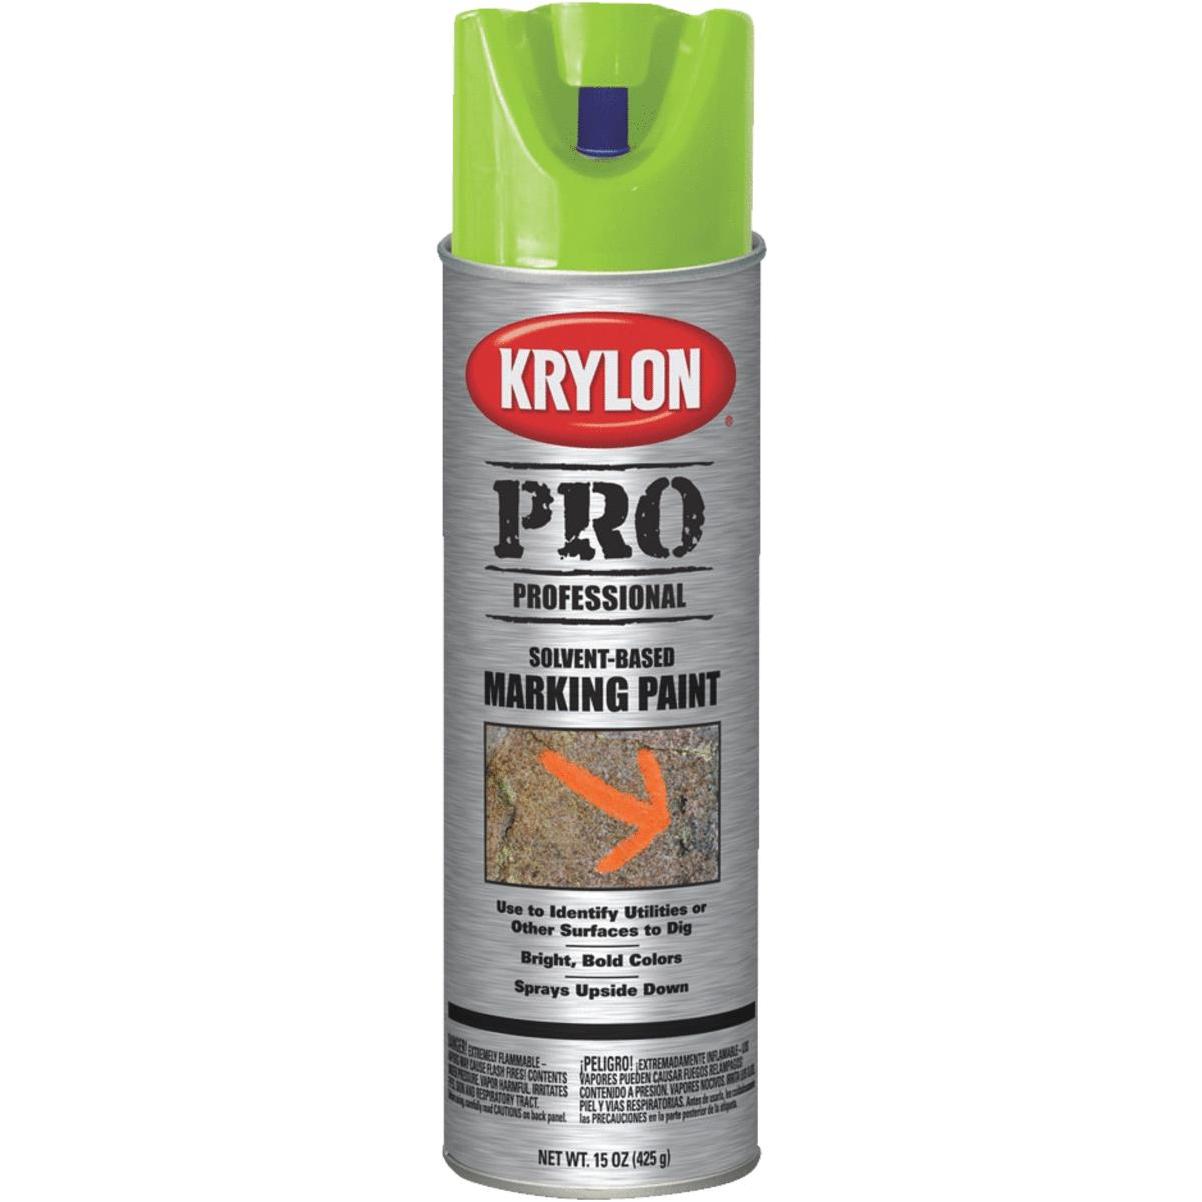 Krylon 11 oz. Fluorescent Spray Paint, Green